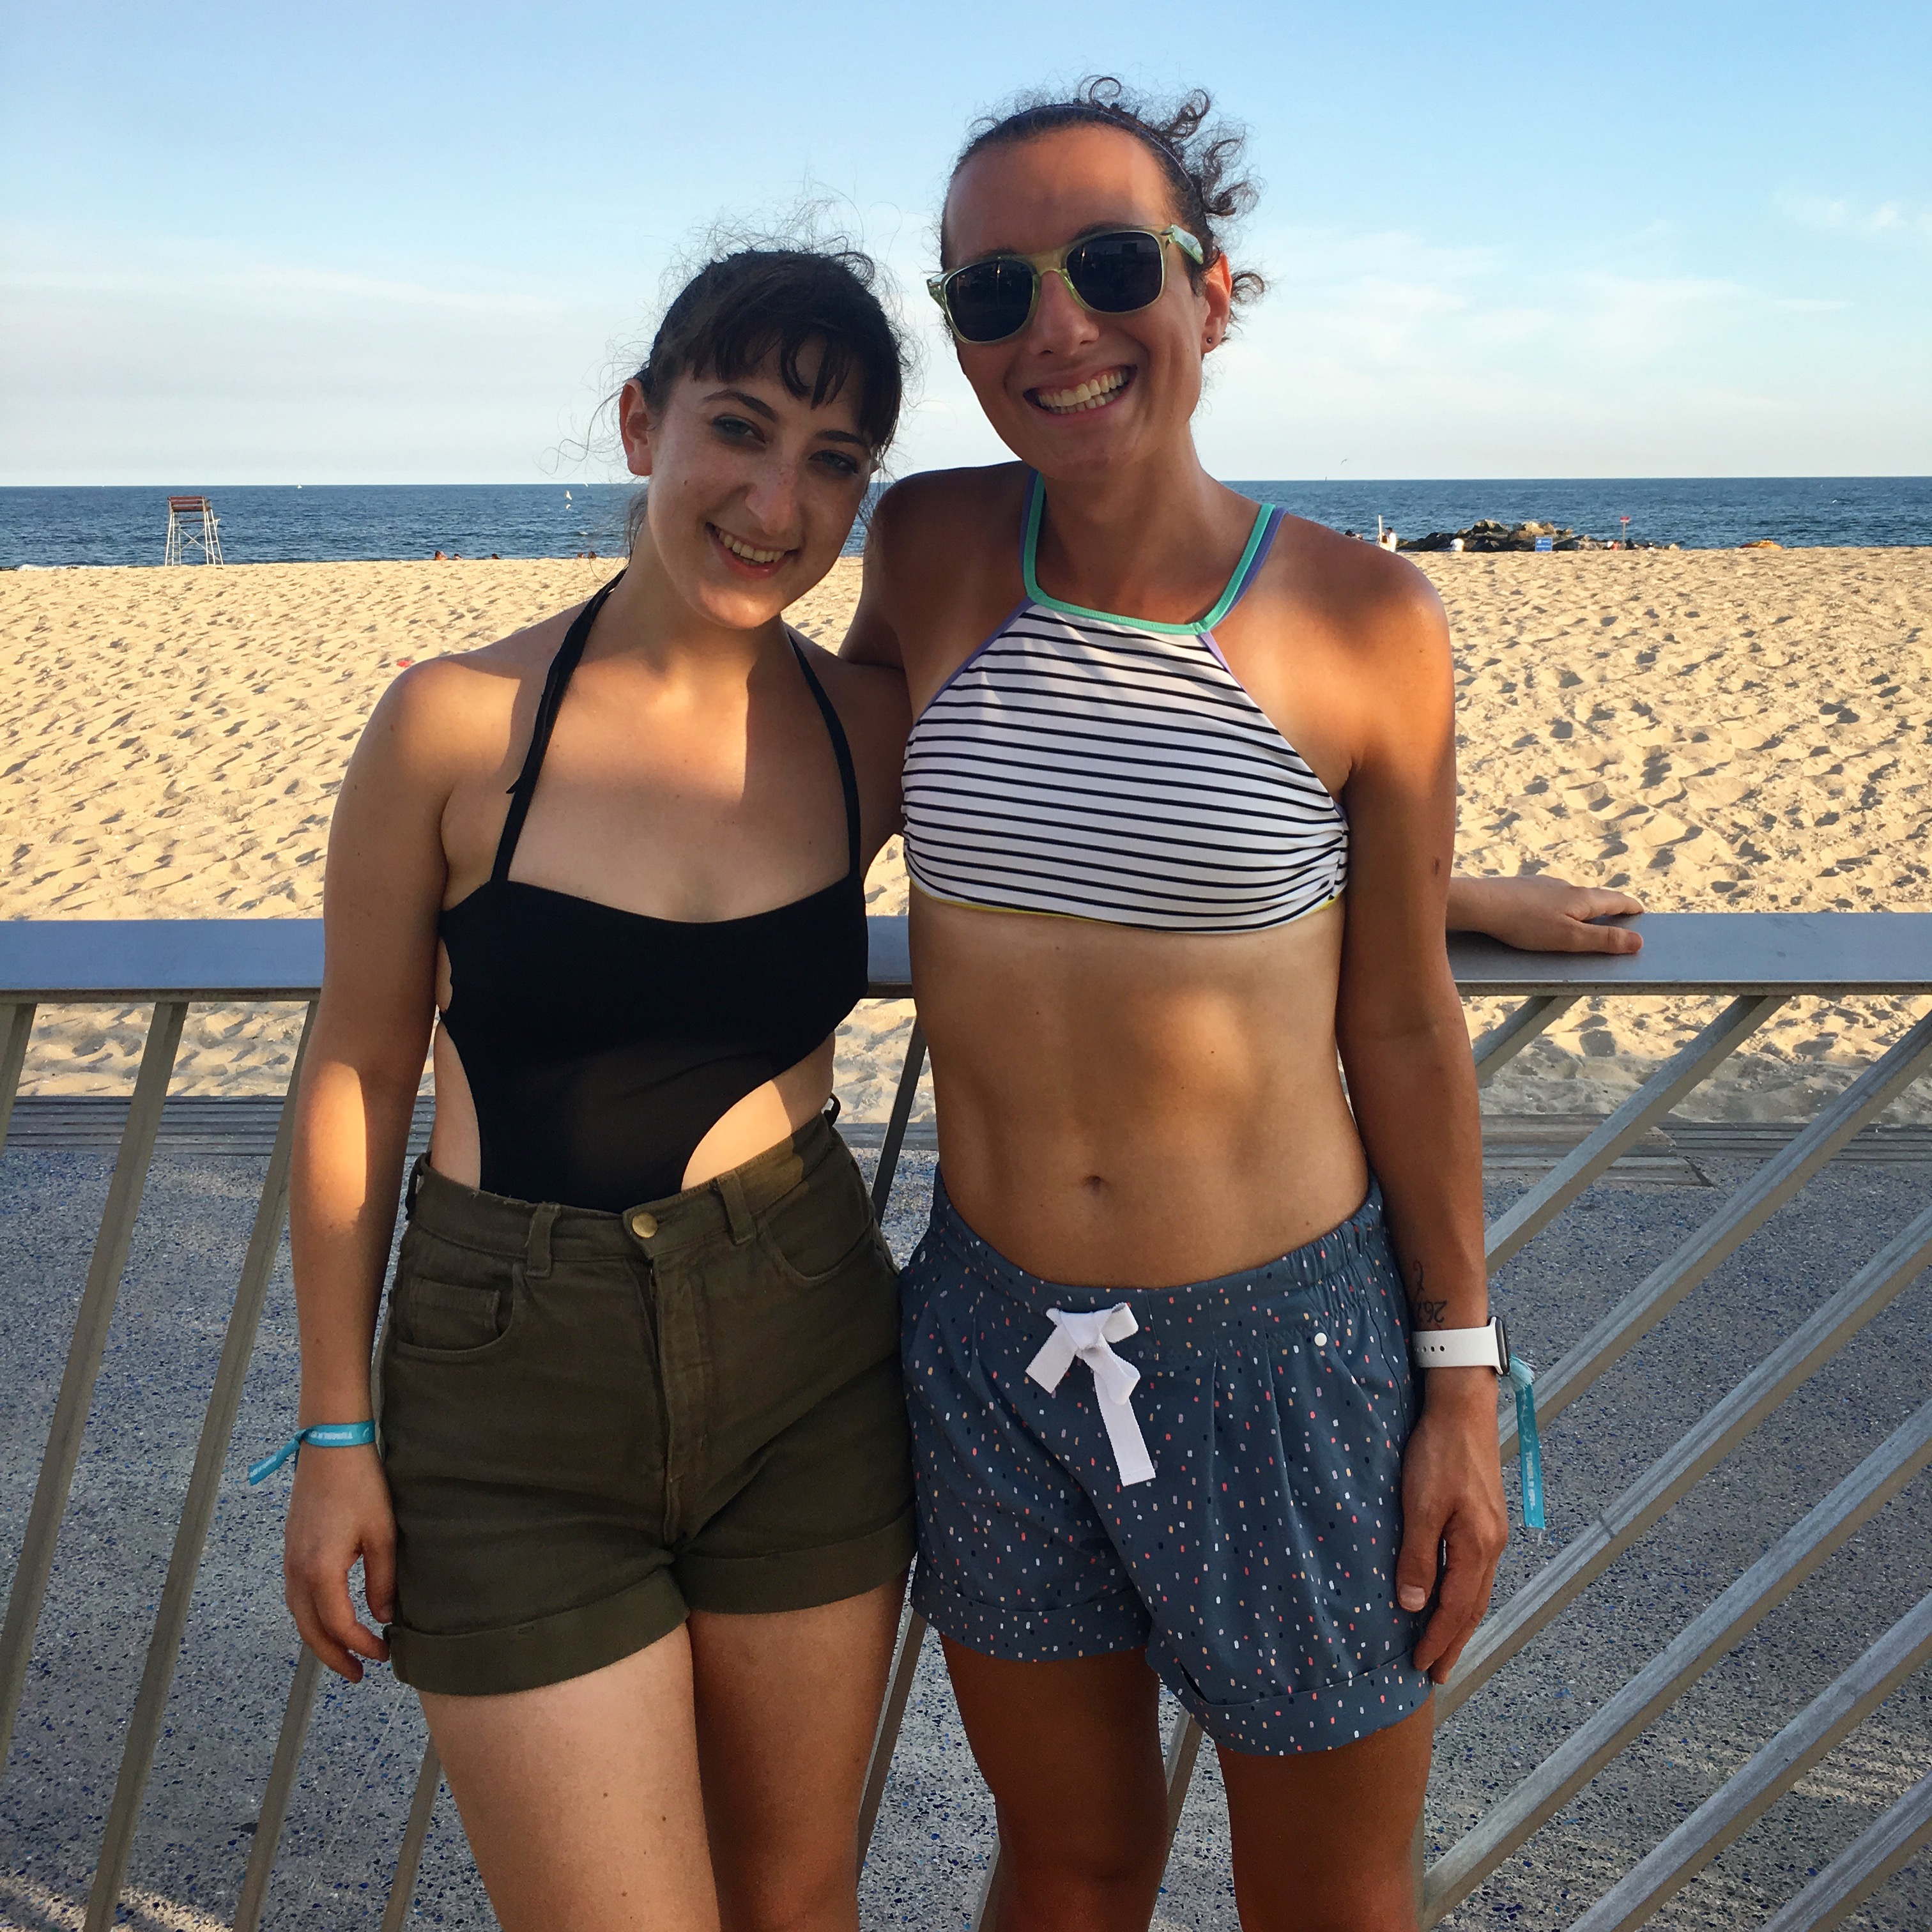 Me and Tamar at the Tumblr beach trip!